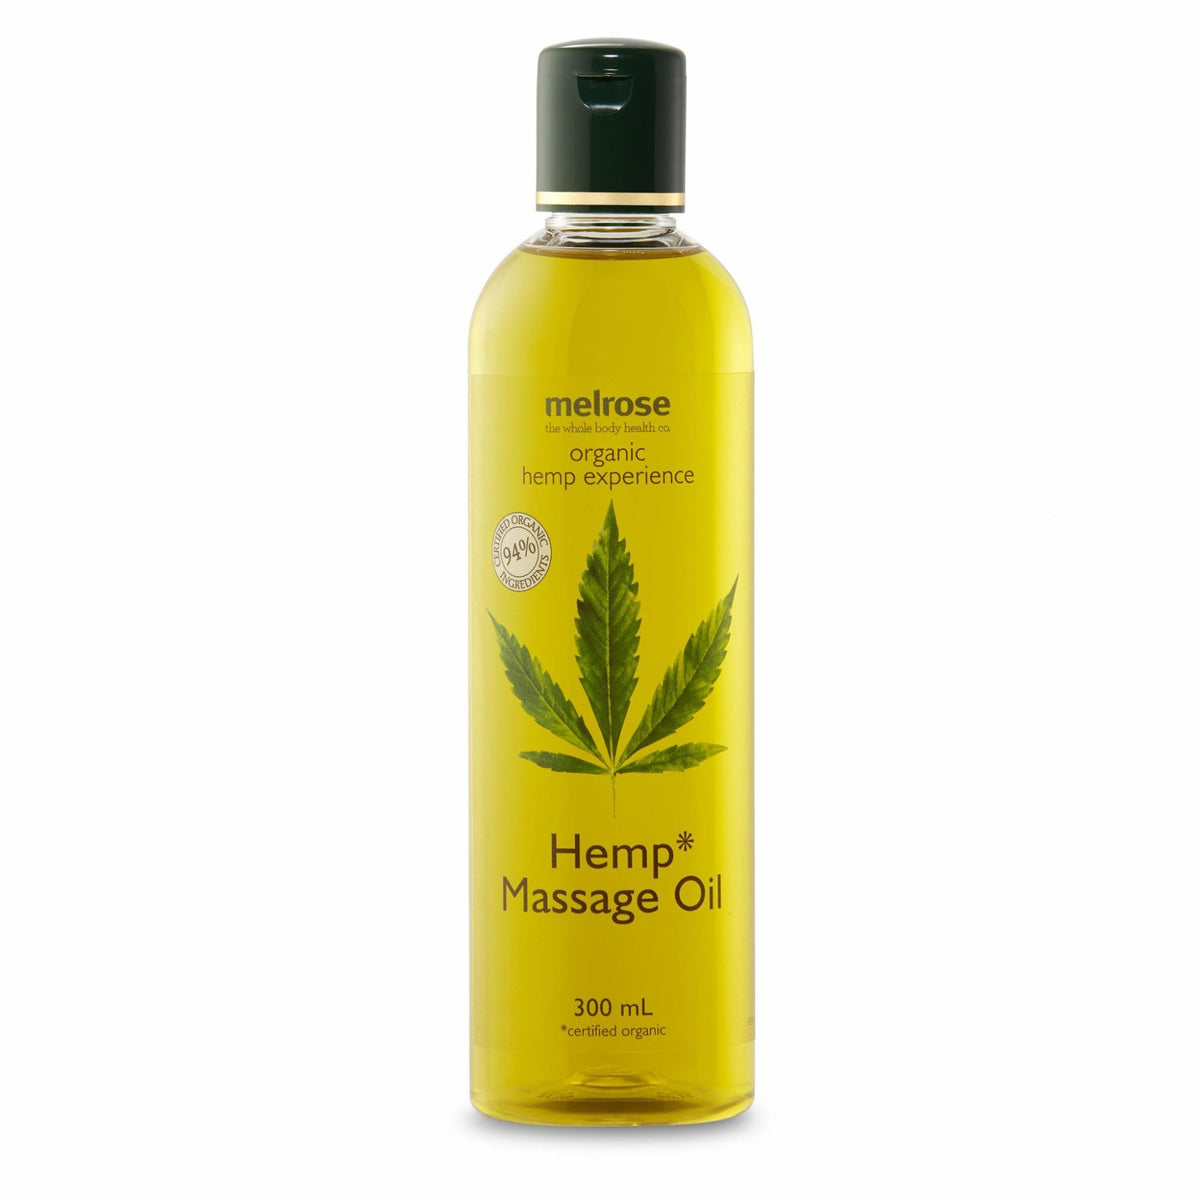 Melrose Hemp Experience Organic Hemp Massage Oil